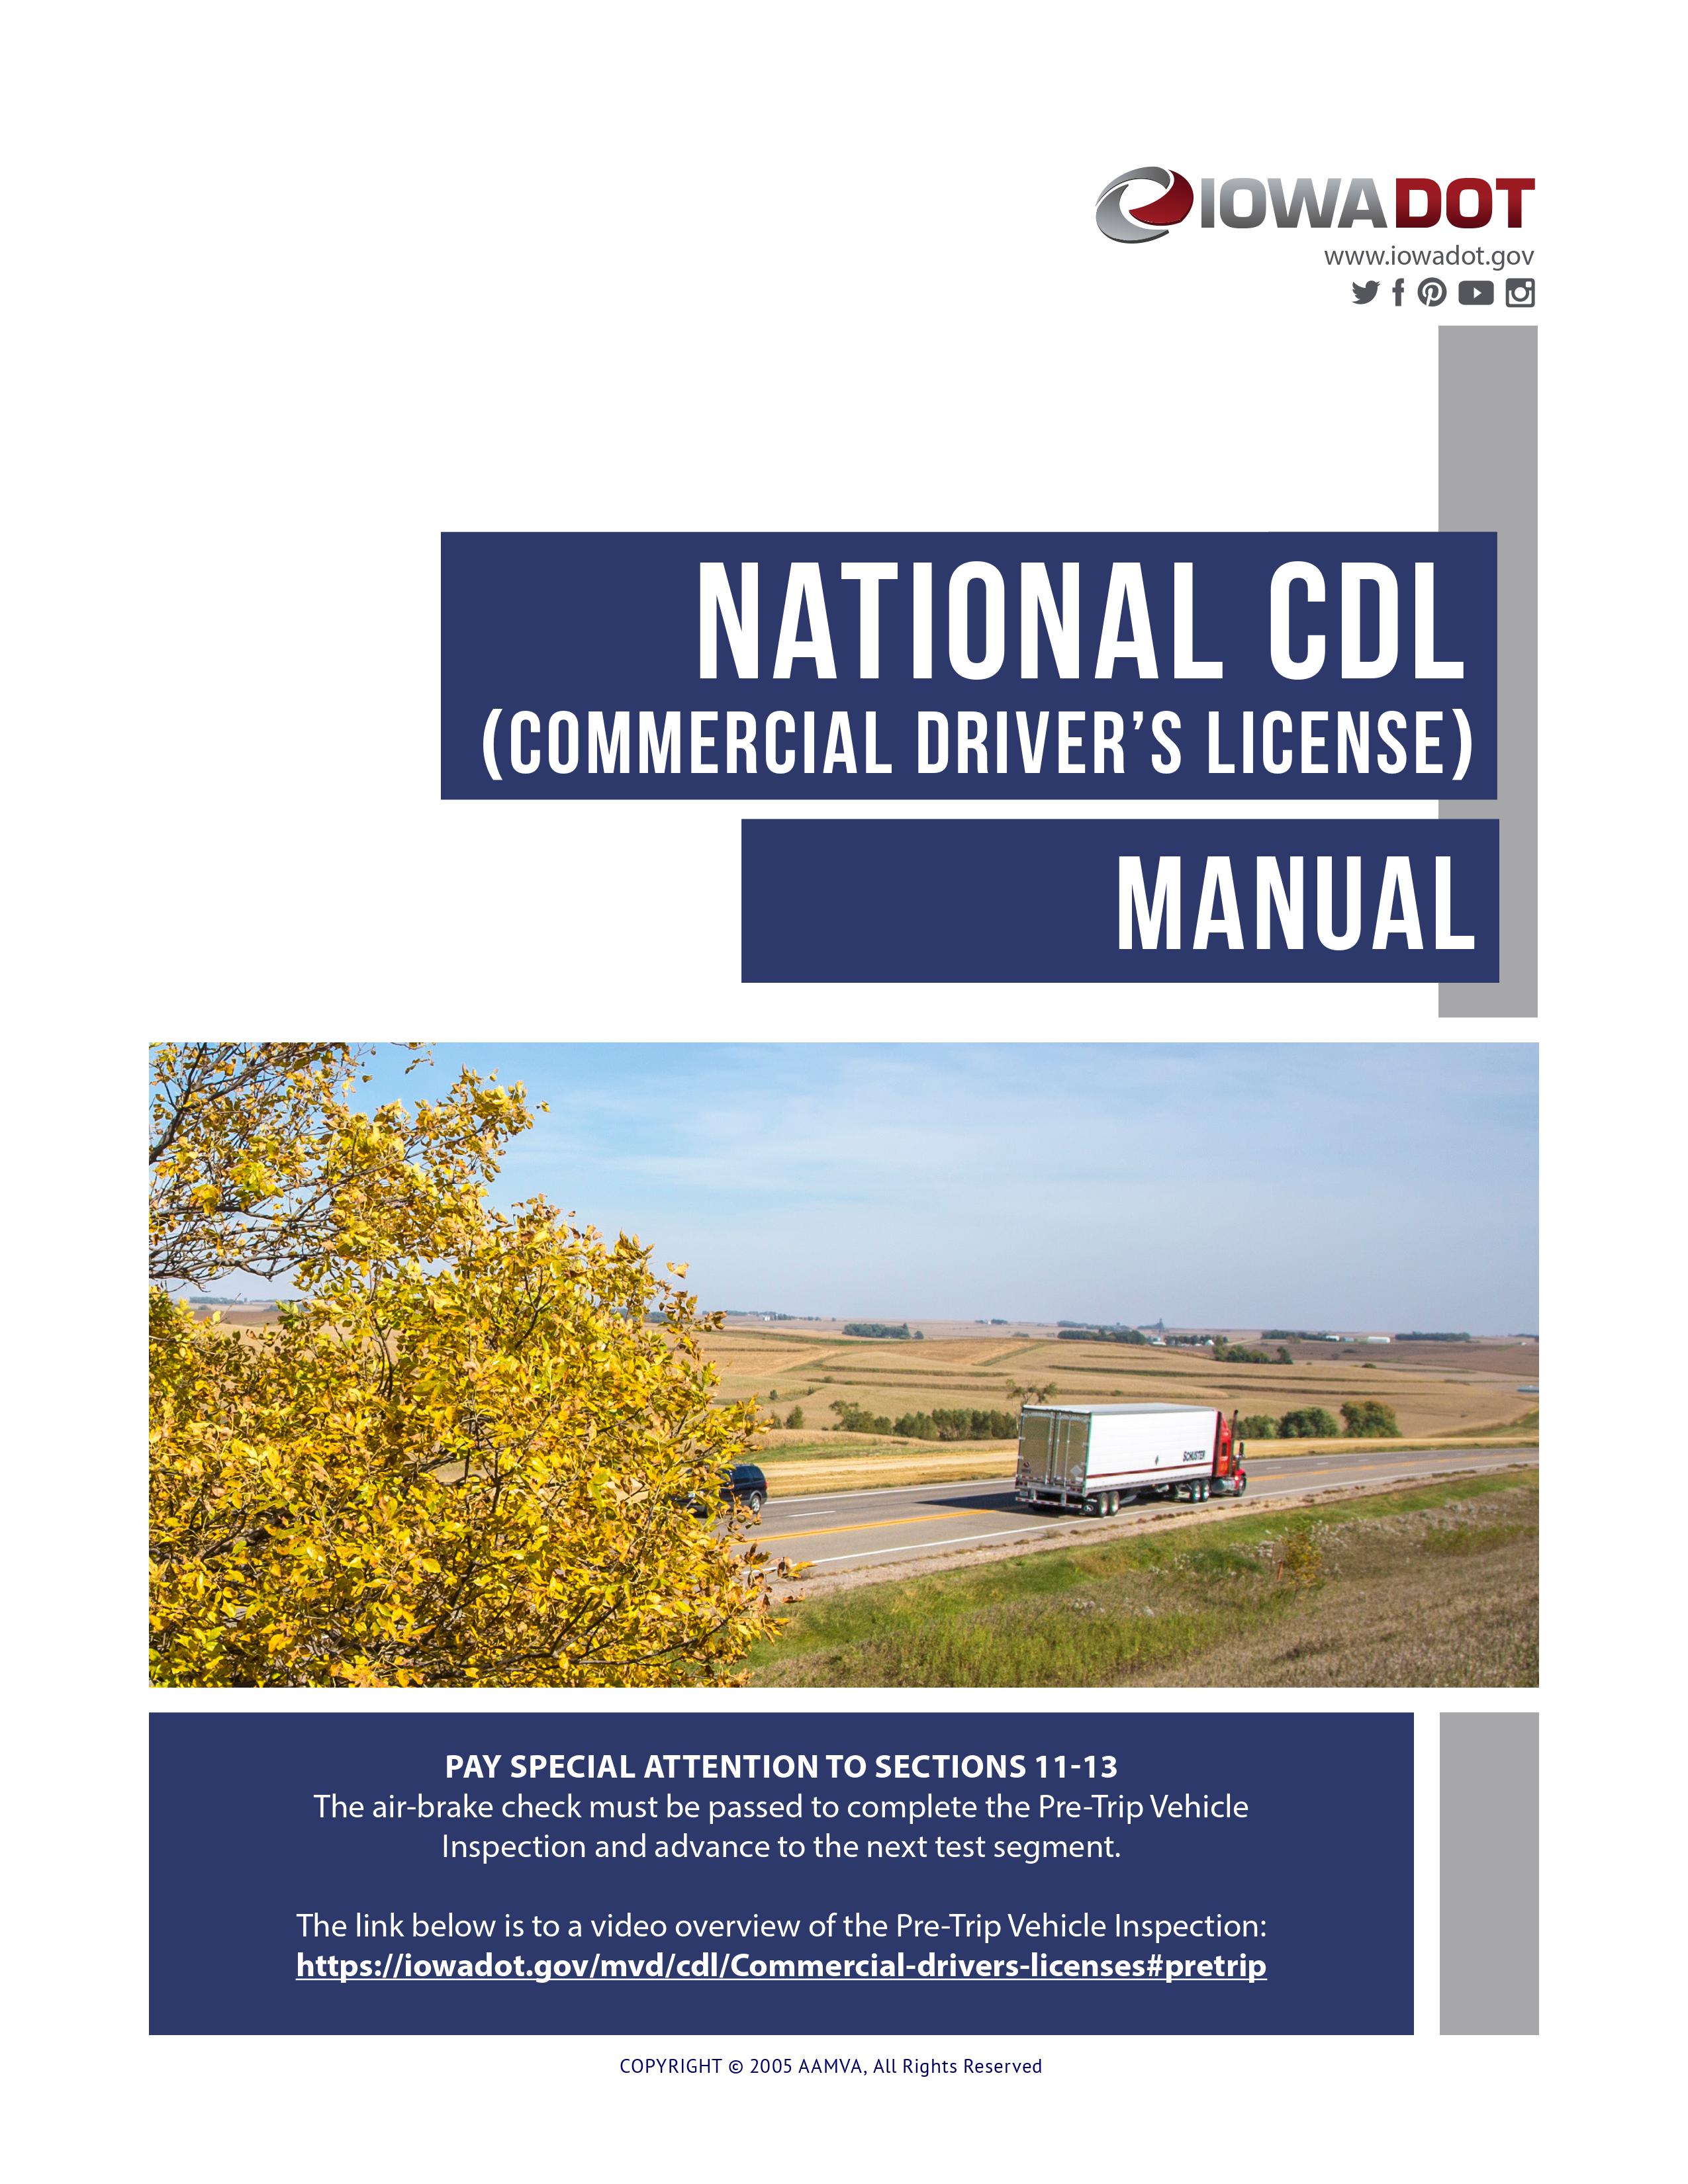 Iowa's CDL Manual